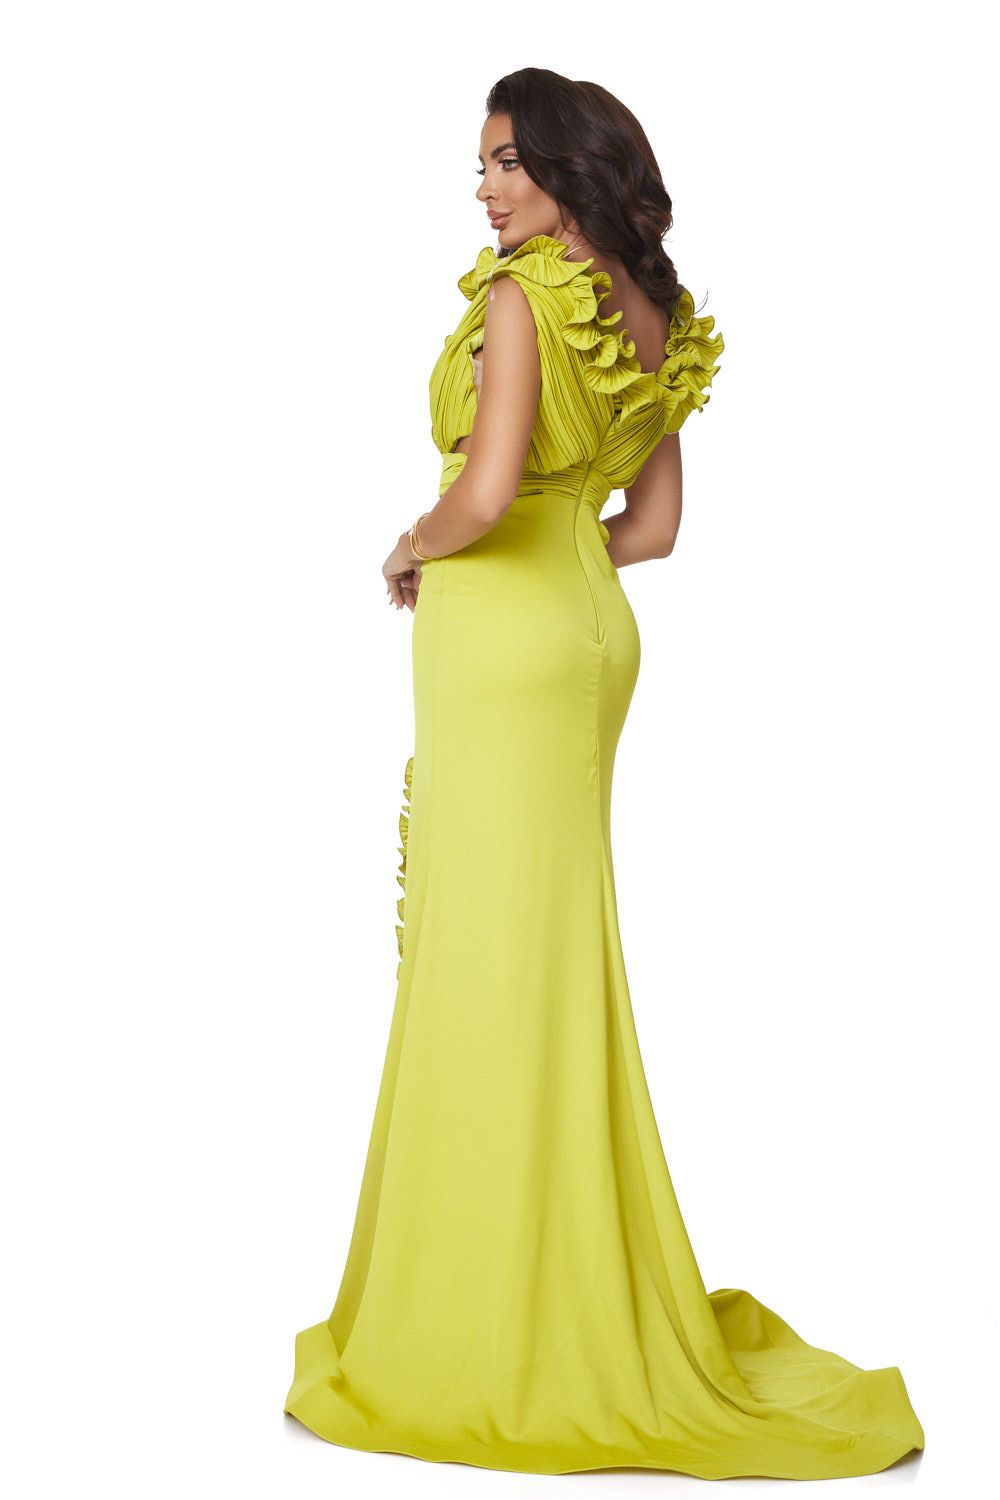 Long lime green dress for women by Zapissa Bogas